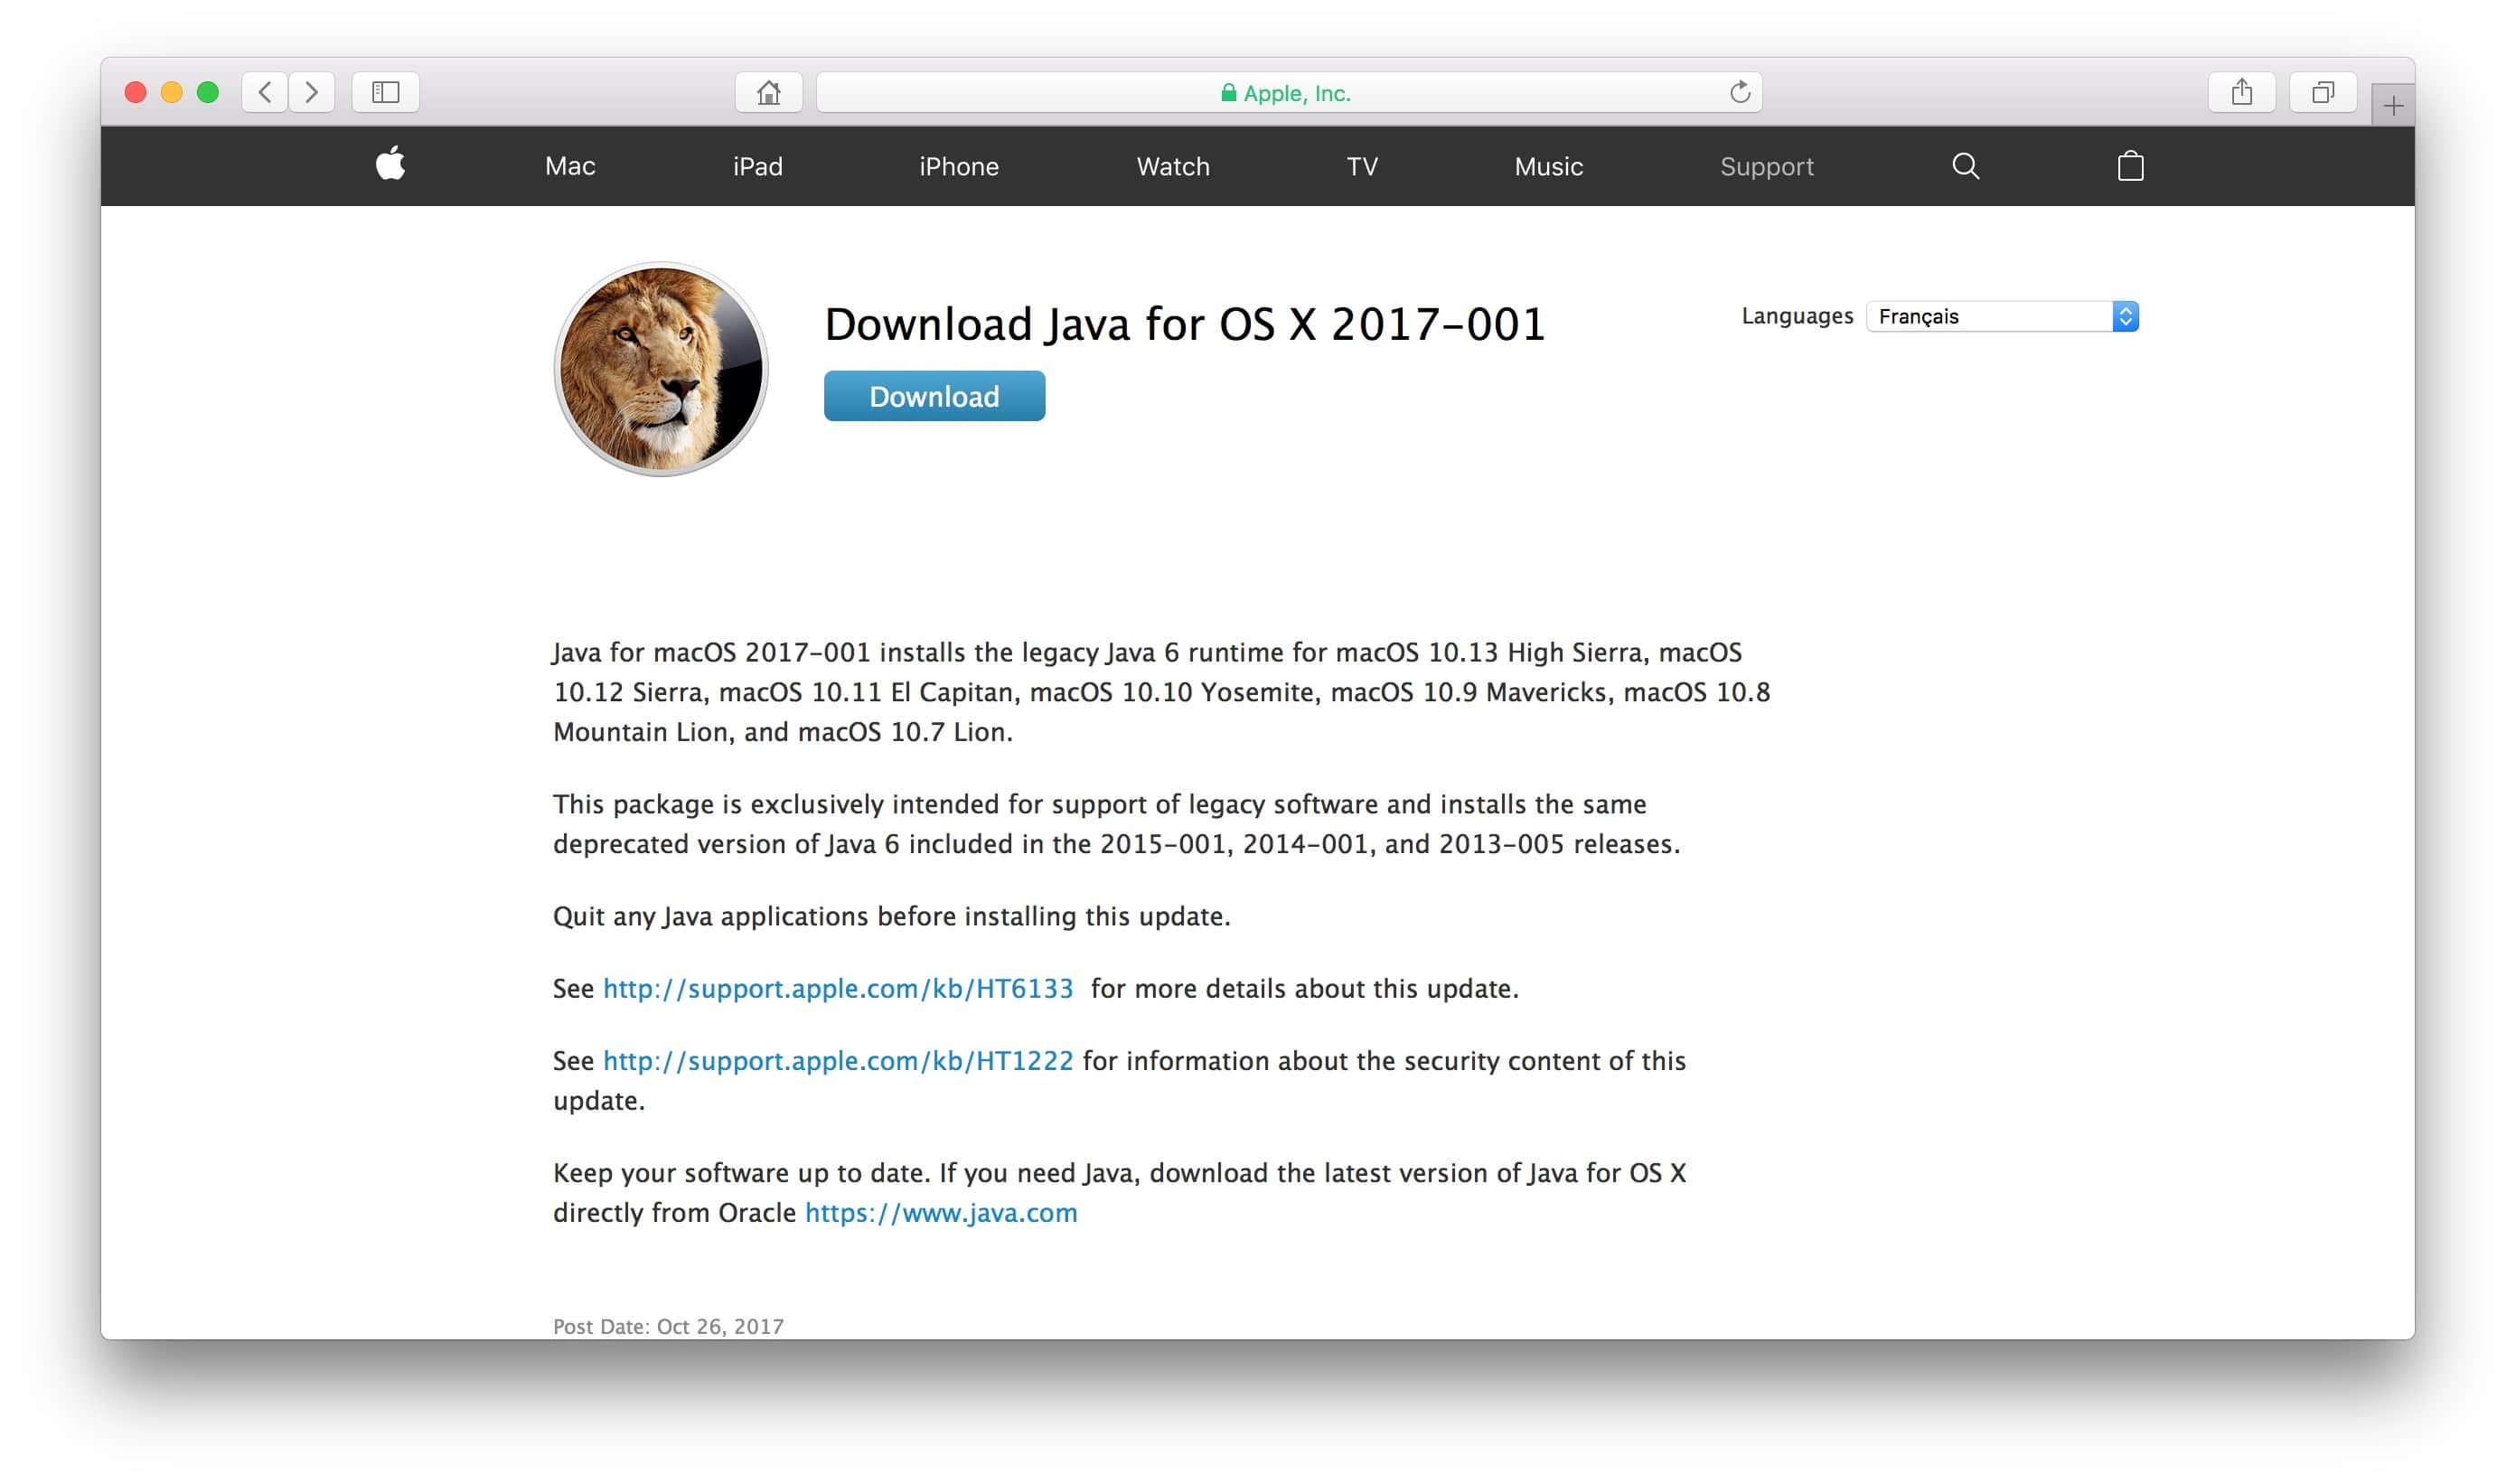 java se development kit 10 downloads for mac